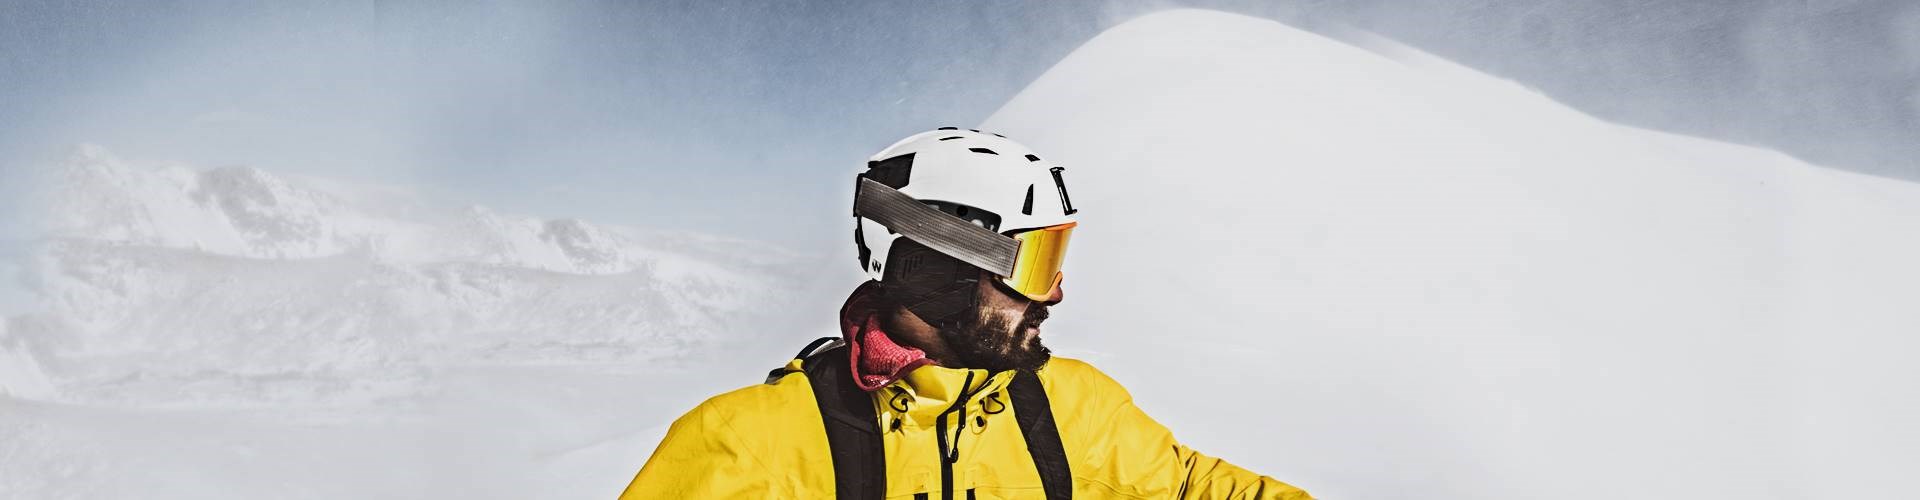 Adventure – Mounting Capabilities for Ski  Snow Helmets | Team Wendy